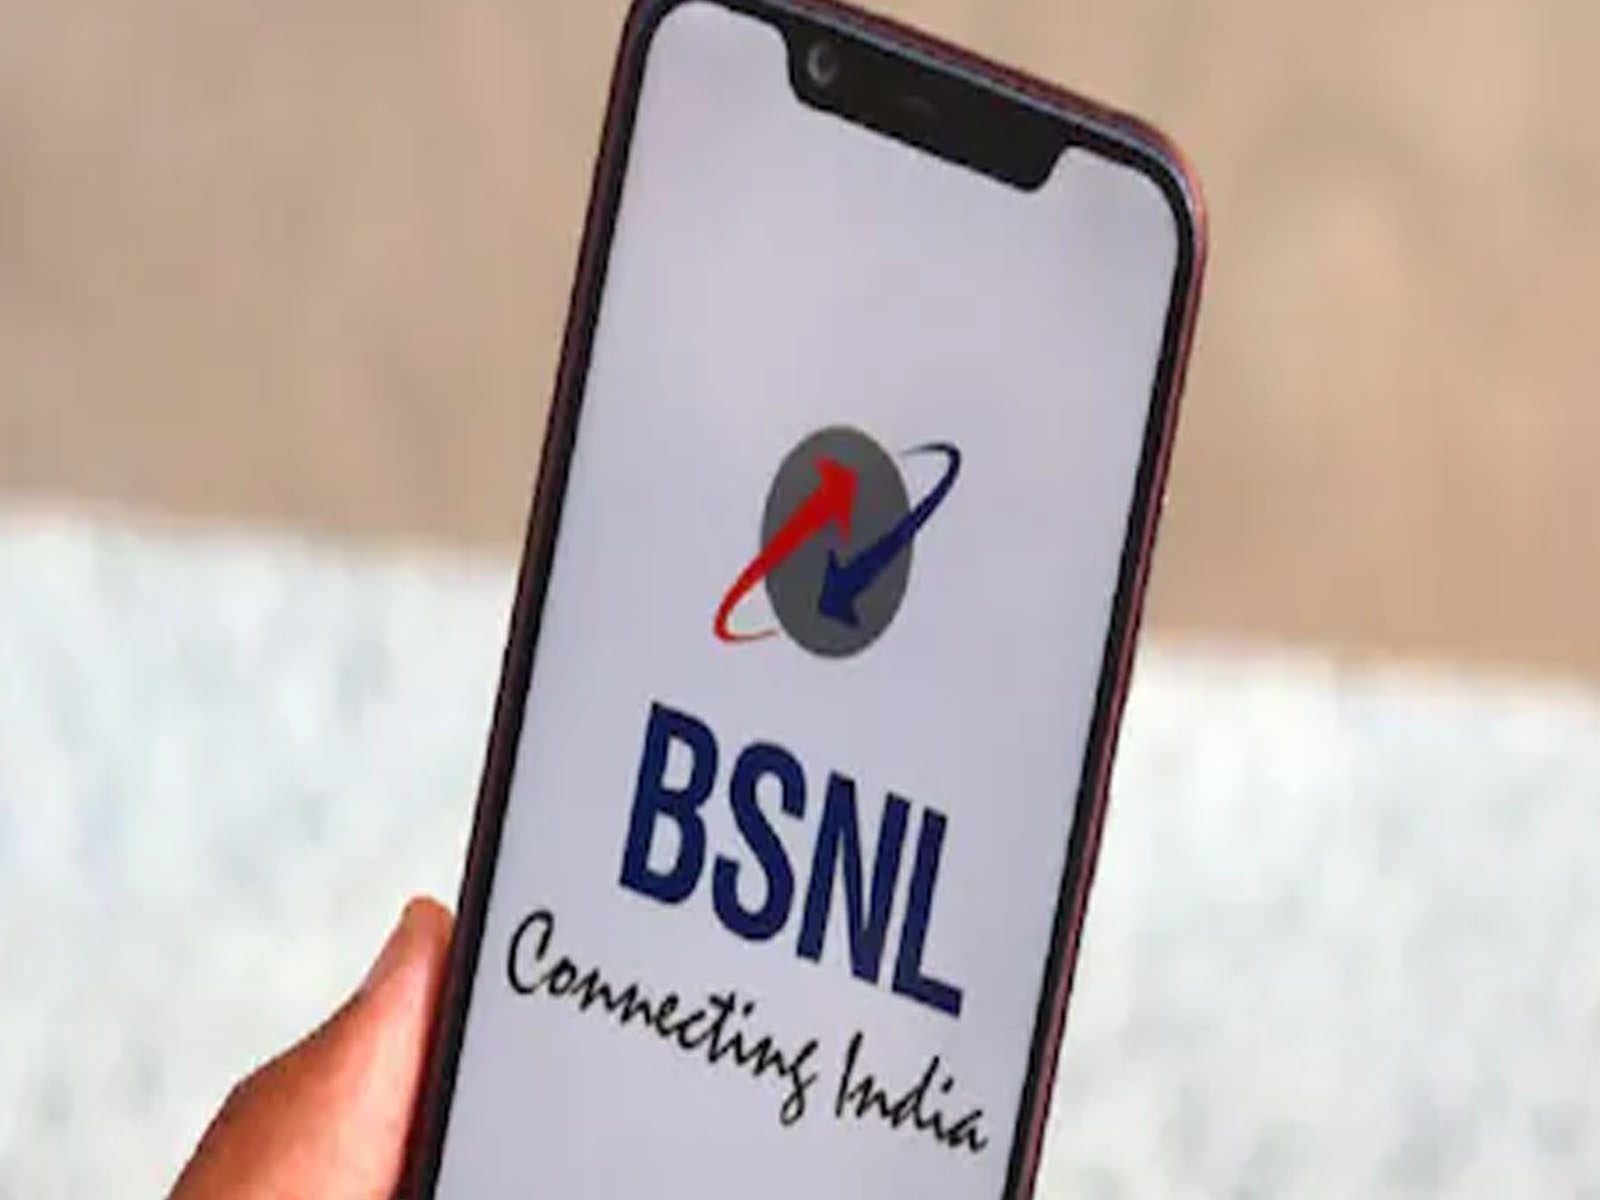 BSNL ਨੇ ਲਿਆਂਦੇ ਦੋ ਨਵੇਂ ਪਲਾਨ, ਅਨਲਿਮਟਿਡ ਕਾਲਿੰਗ ਦੇ ਨਾਲ ਮਿਲ ਰਿਹਾ Daily 2GB ਡਾਟਾ